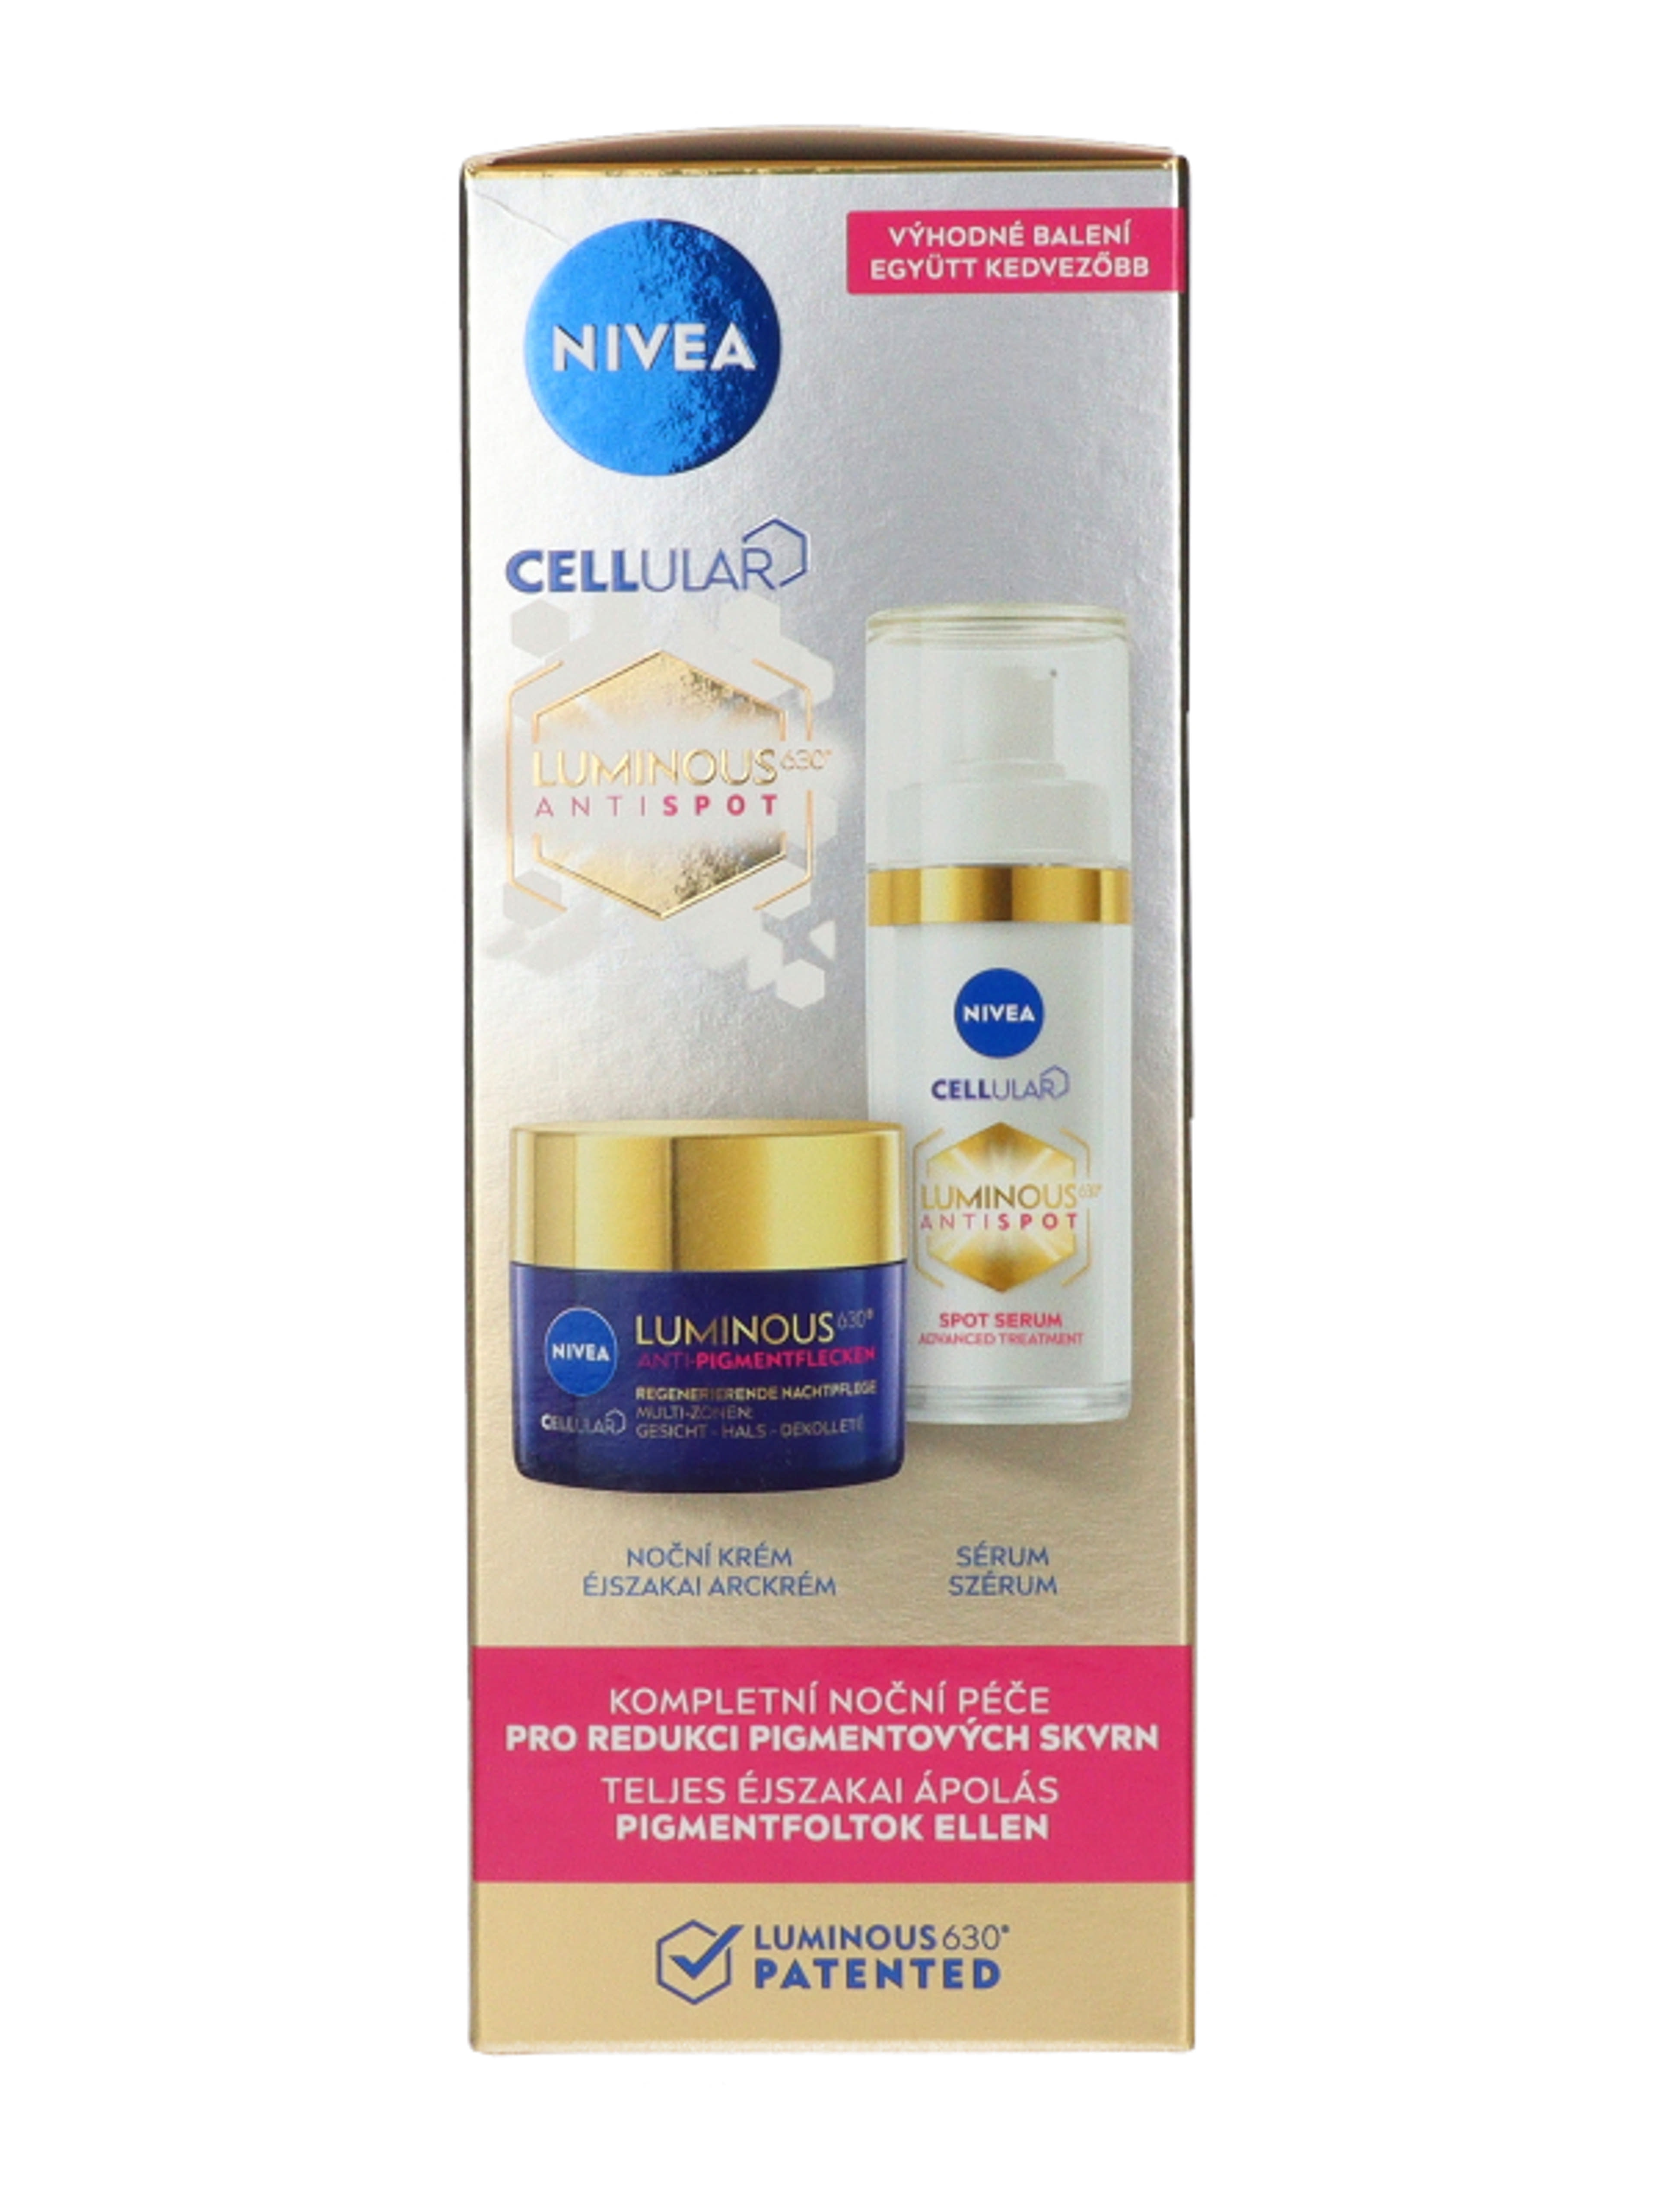 Nivea Cellular Luminous 630 pigmentfoltok ellei krém és szérum duopack 2 db - 80 ml-2